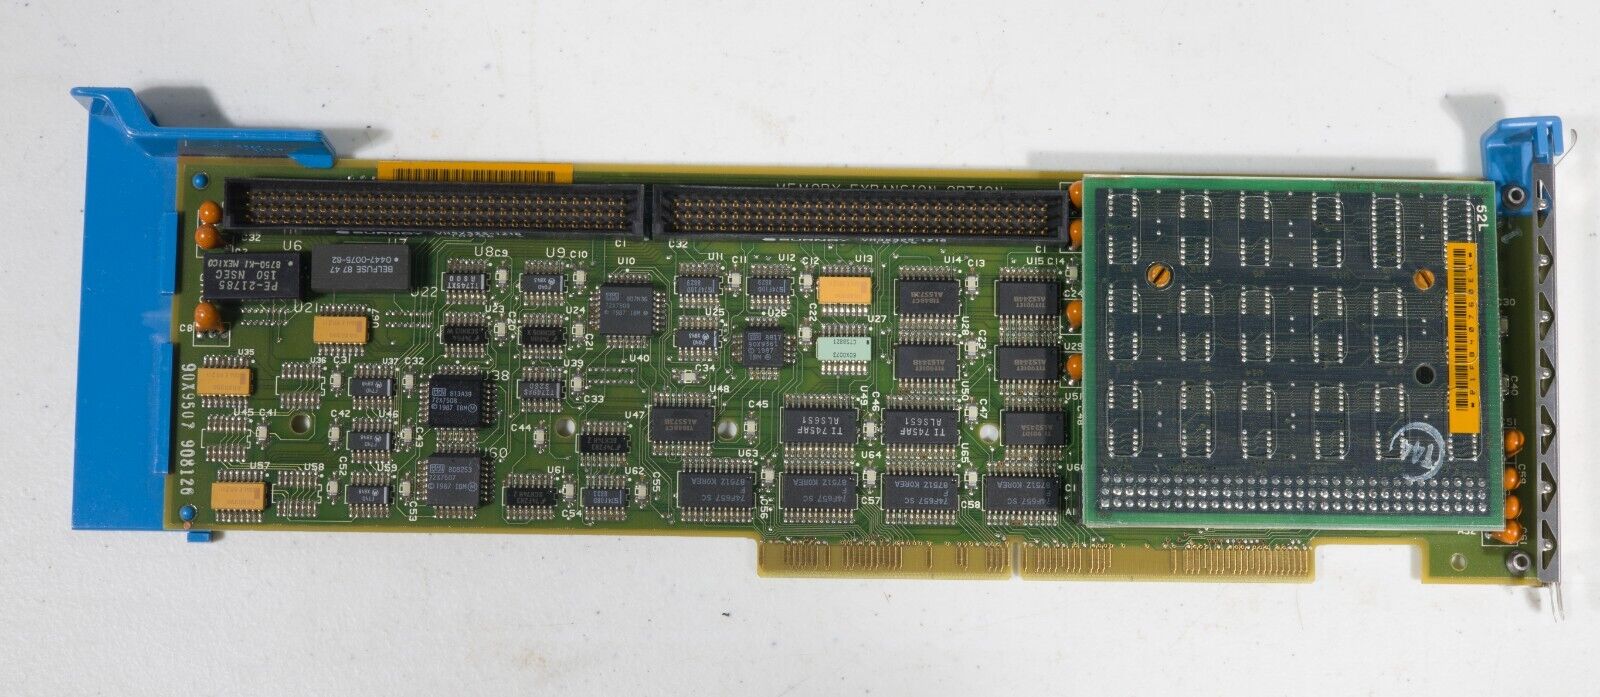 Vintage IBM PS/2 90X9207 Memory Expansion Option 32 bit microchannel ISA702